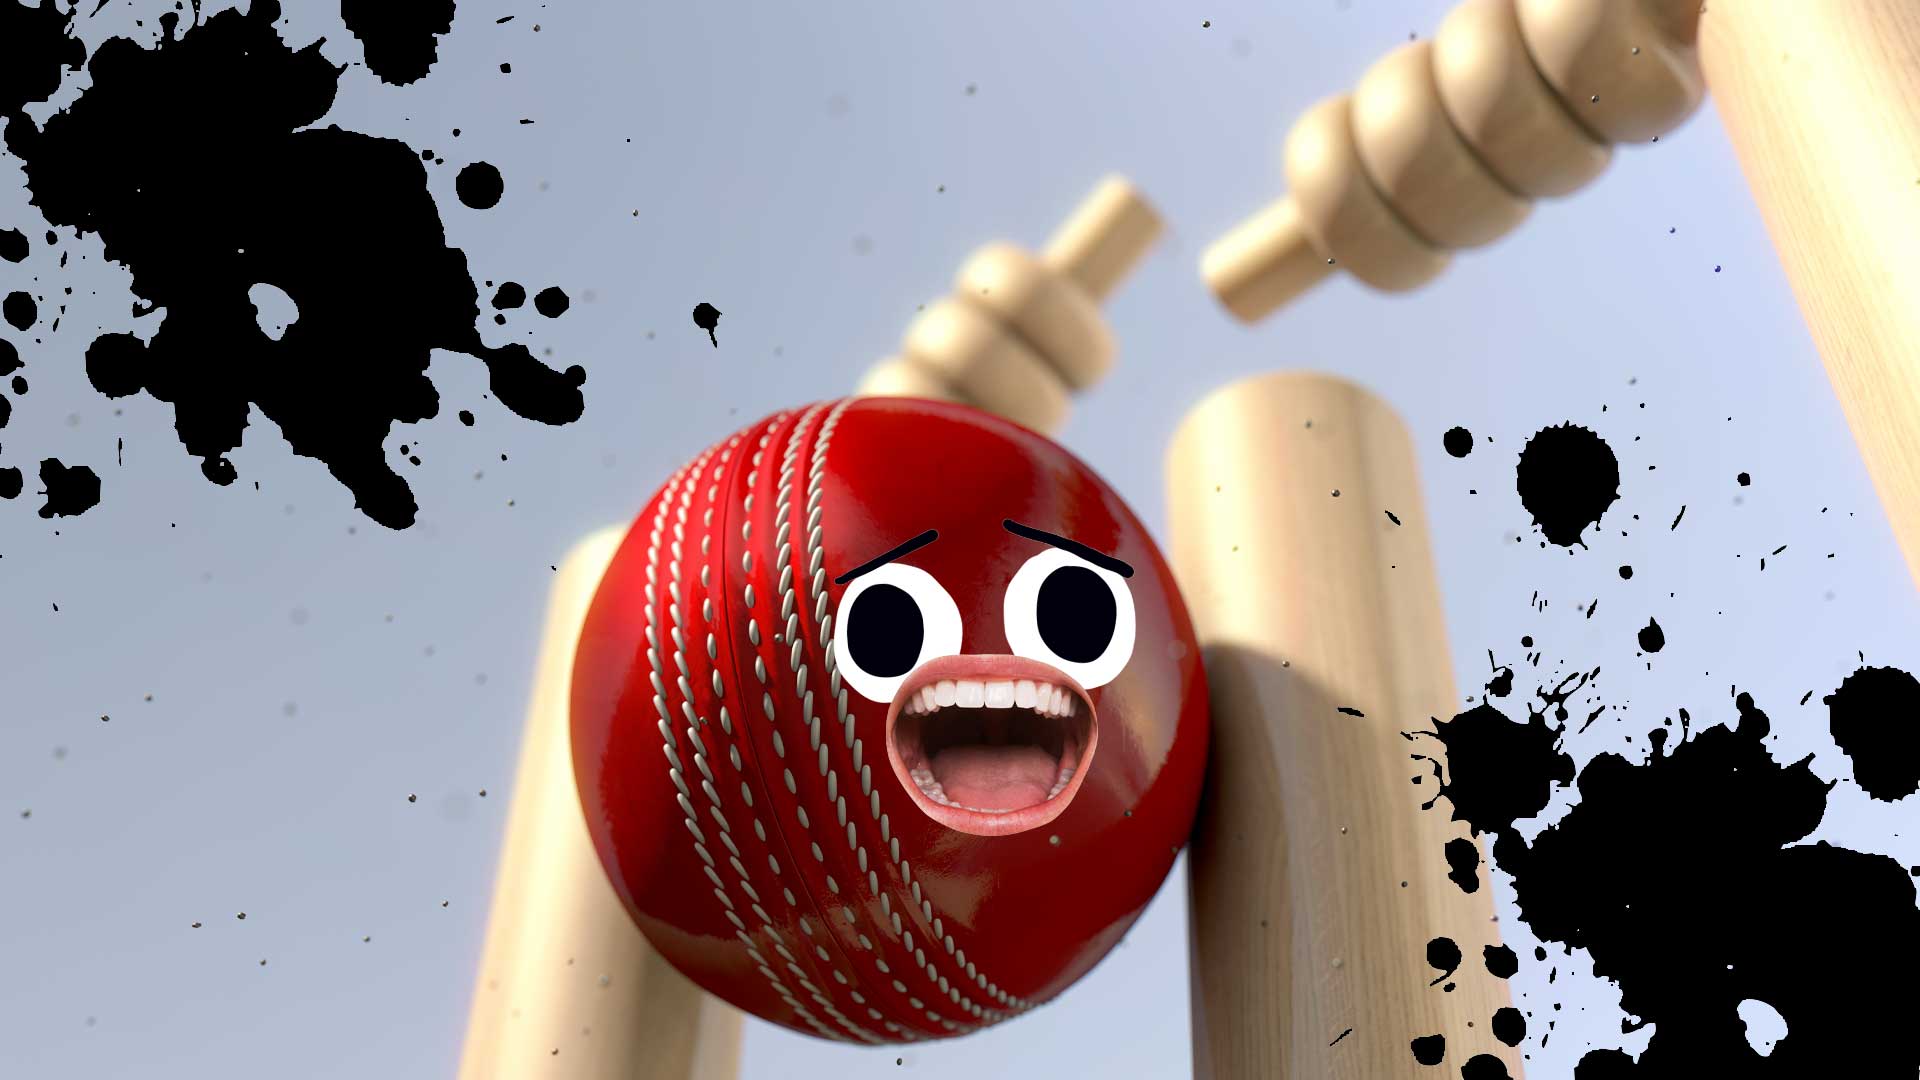 A cricket ball hitting the stumps